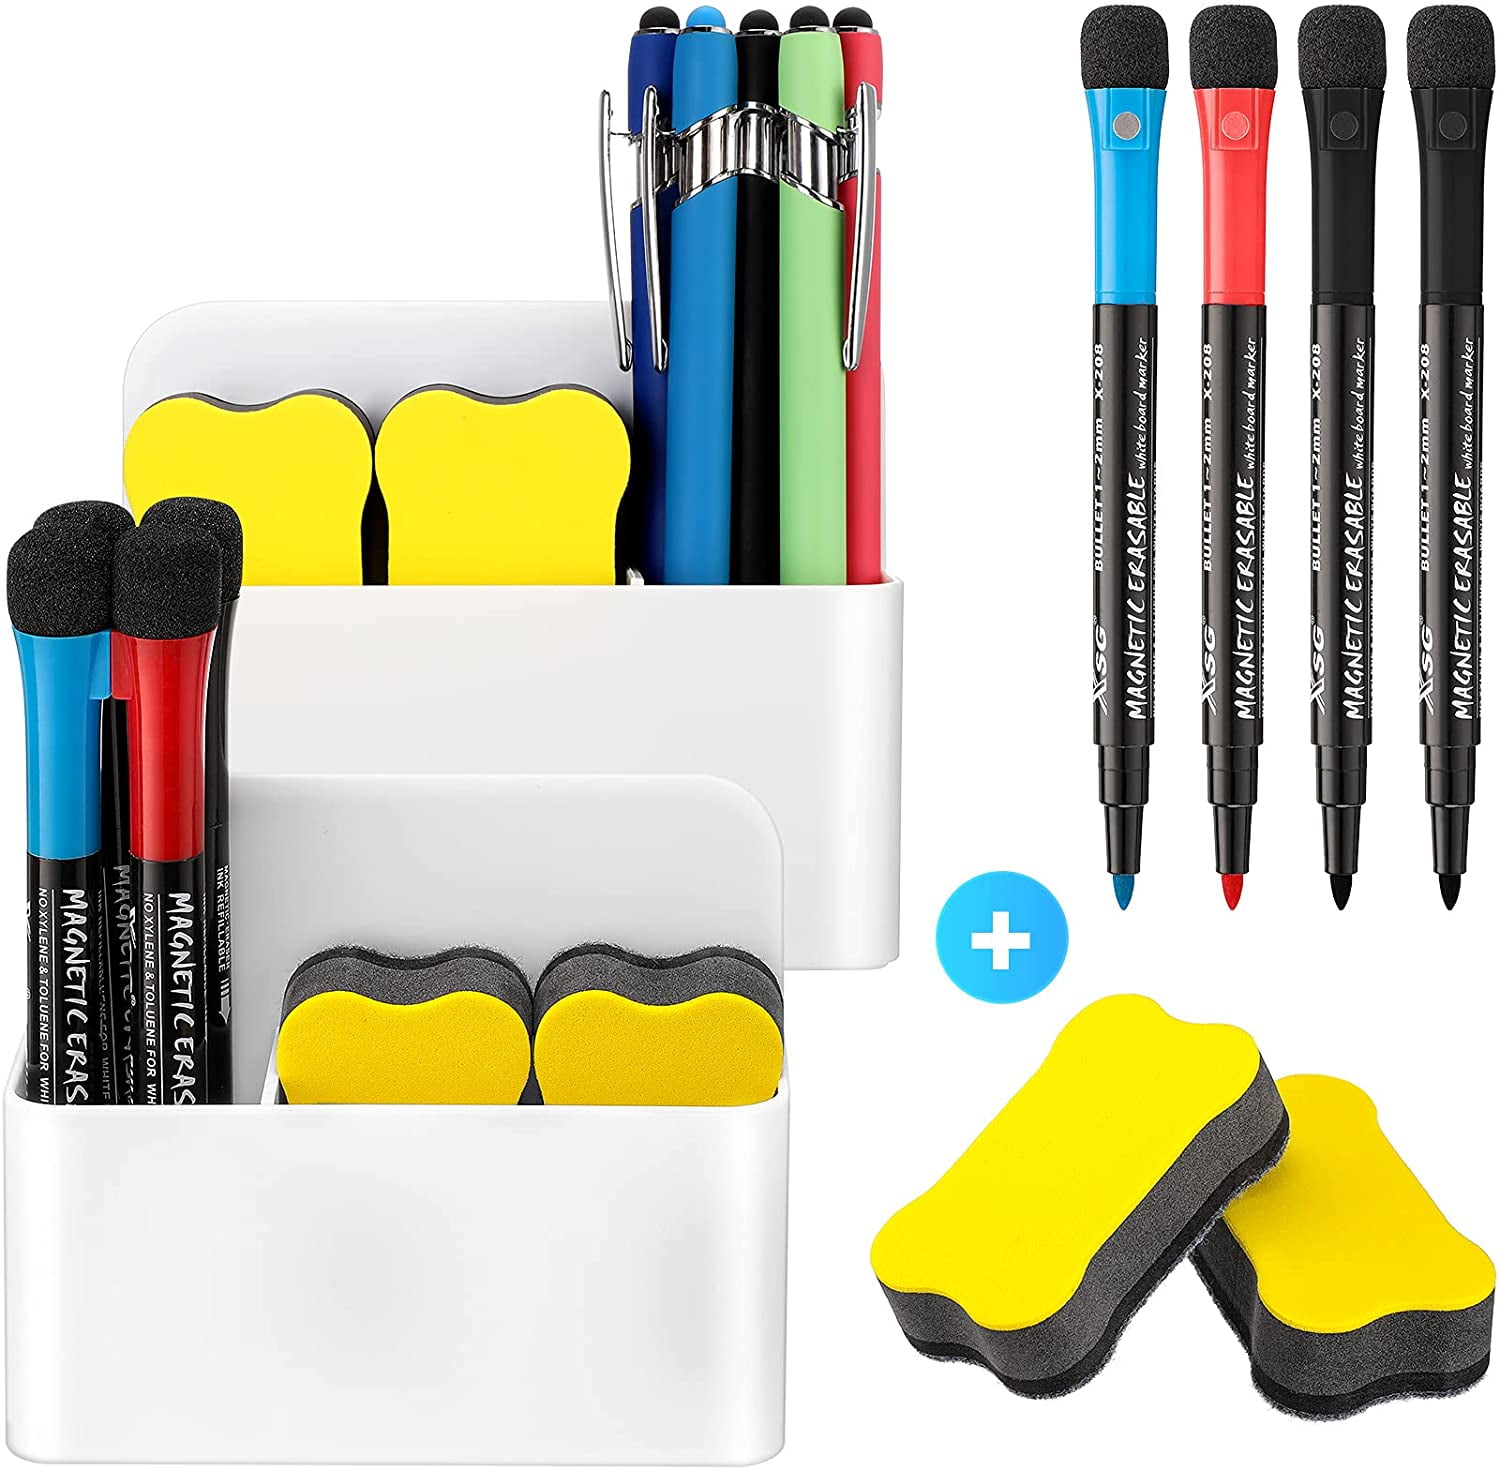 Magnetic Whiteboard Pen Erasable Dry Board Marker Magnet Eraser Office Supplies 